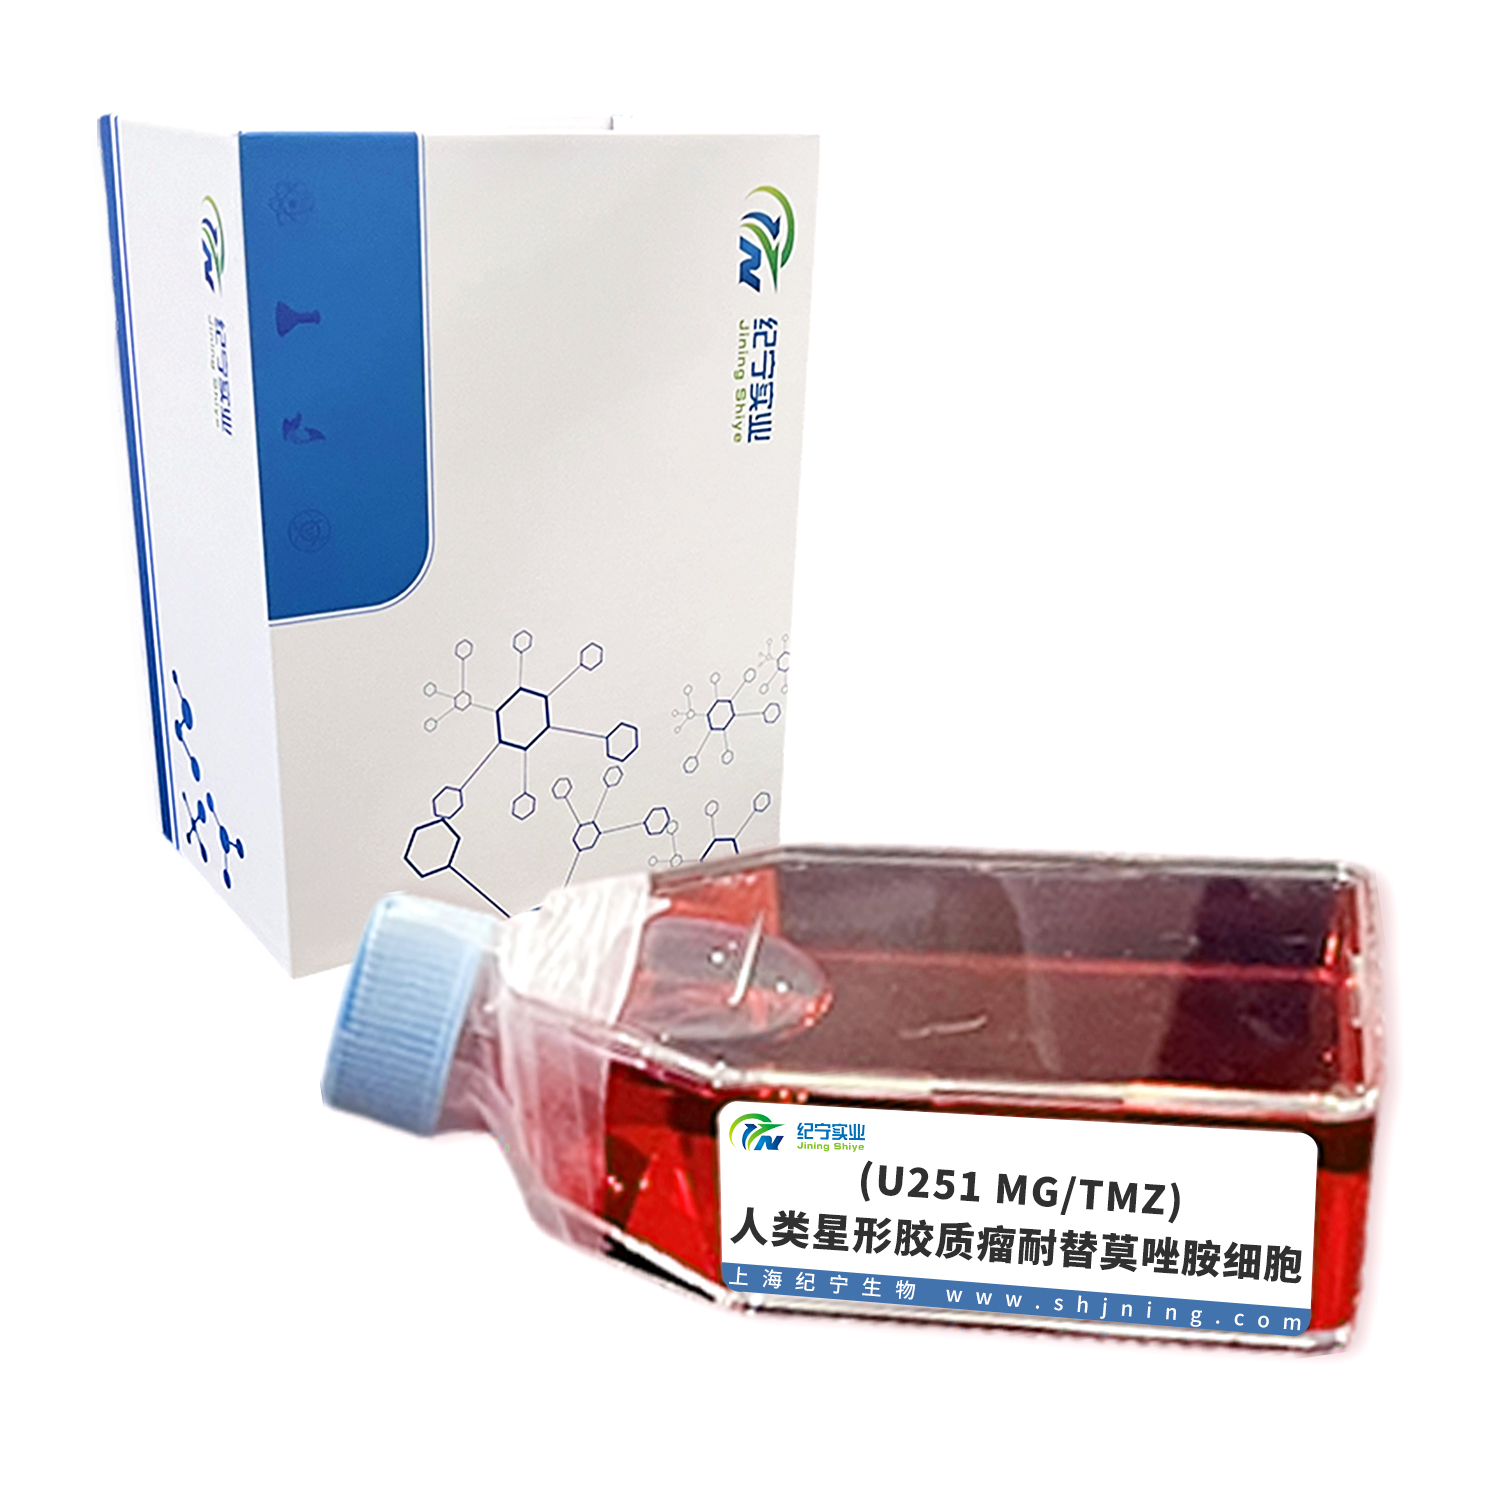 (U251 MG/TMZ)人类星形胶质瘤耐替莫唑胺细胞